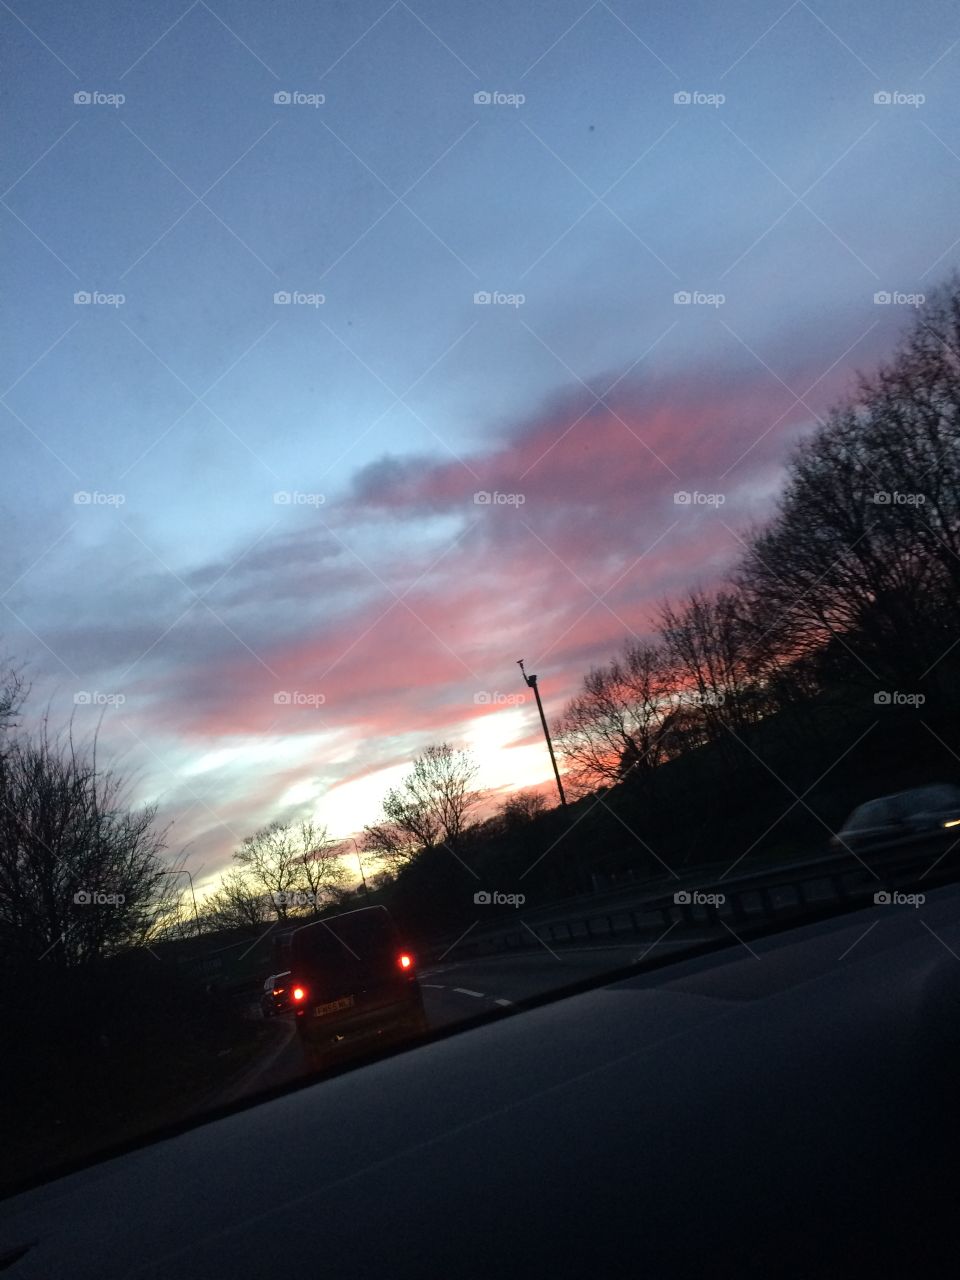 Evening sky taken on an iPhone 5s